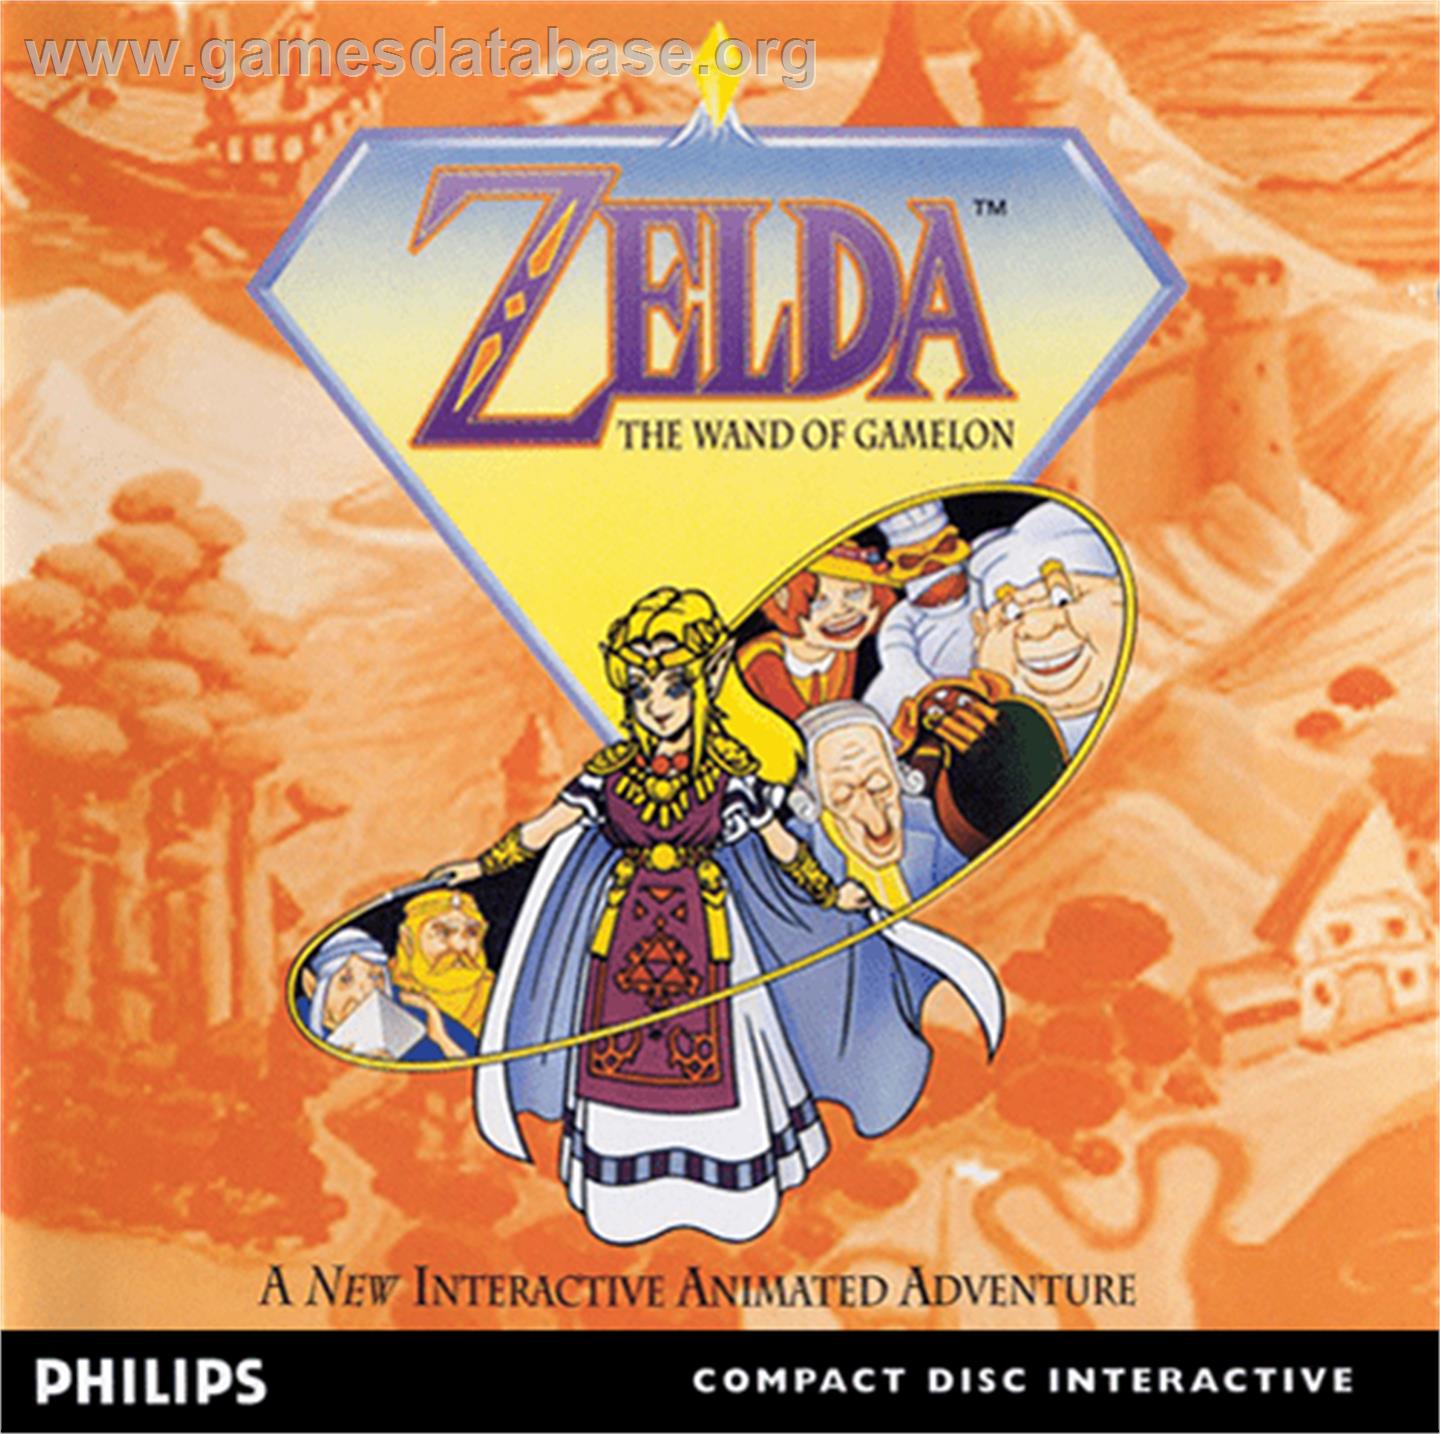 Zelda: The Wand of Gamelon - Philips CD-i - Artwork - Box